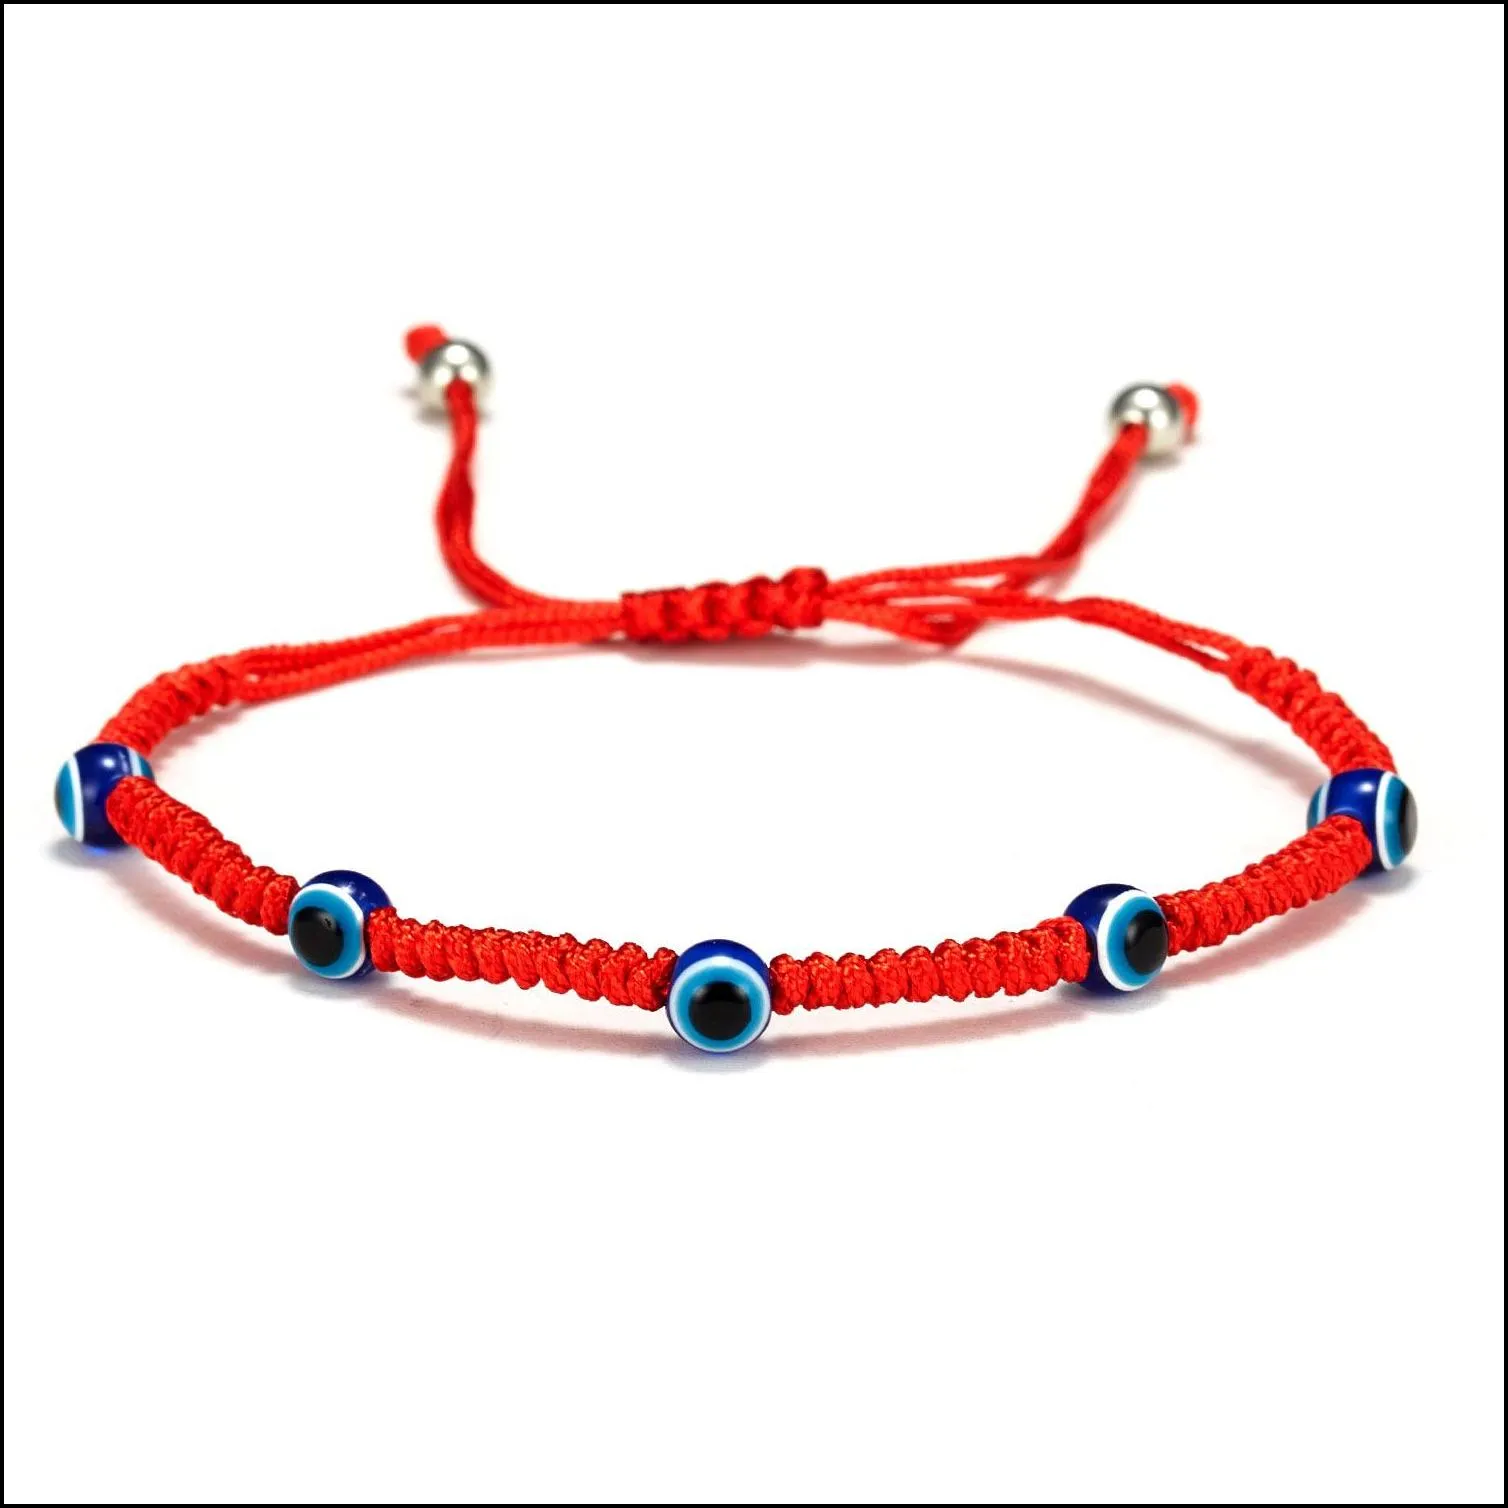 blue turkish evil eye fatima friendship lucky bangles kabbalah religious hamsa hand charms bracelets red rope woven adjustable